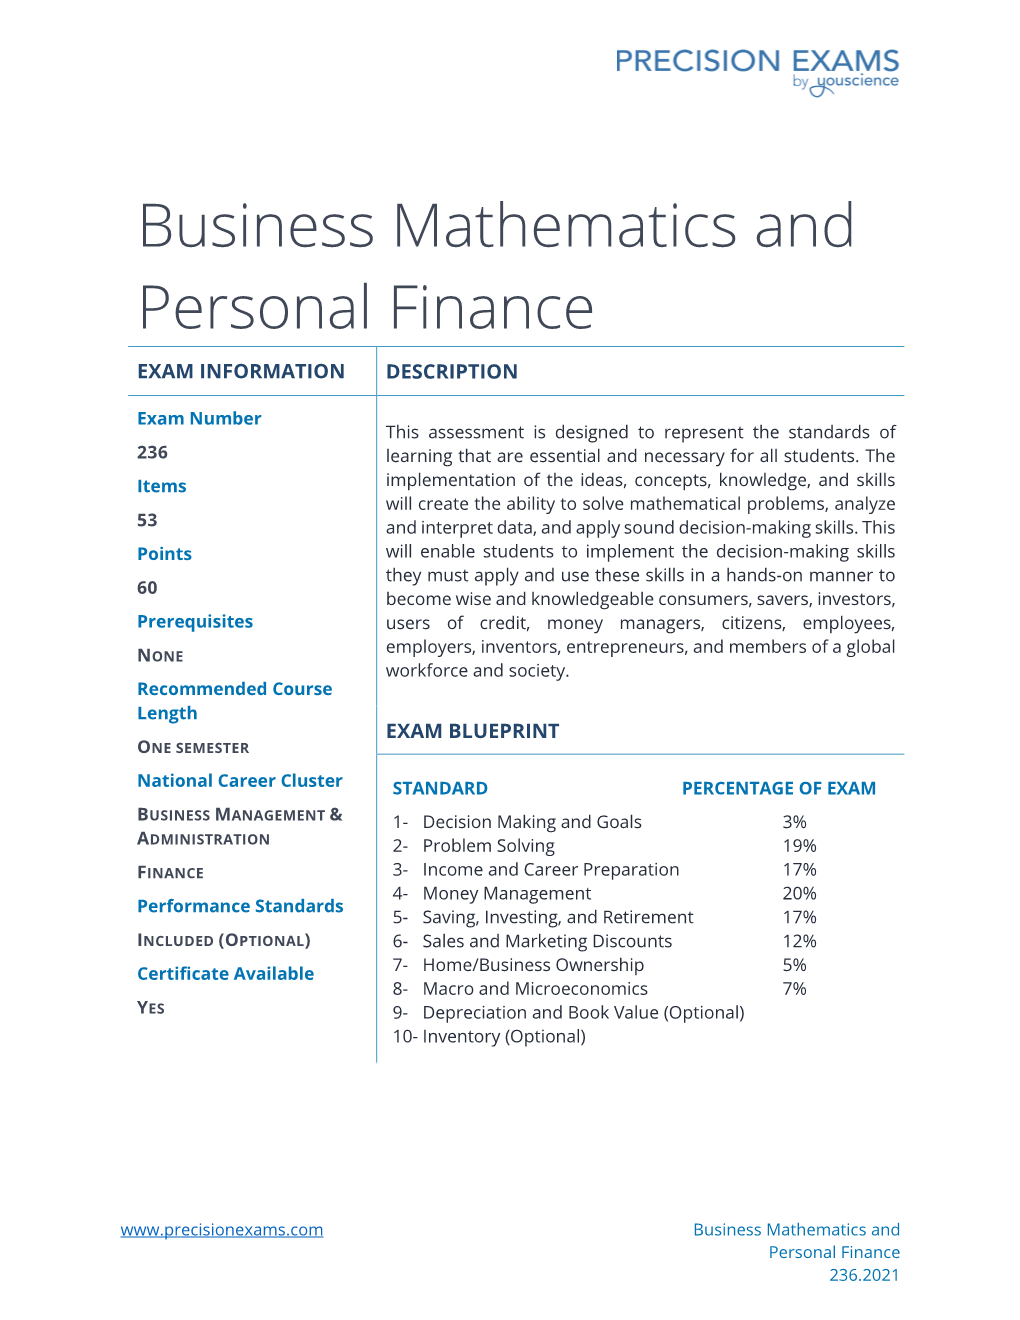 Business Mathematics and Personal Finance 236.2021